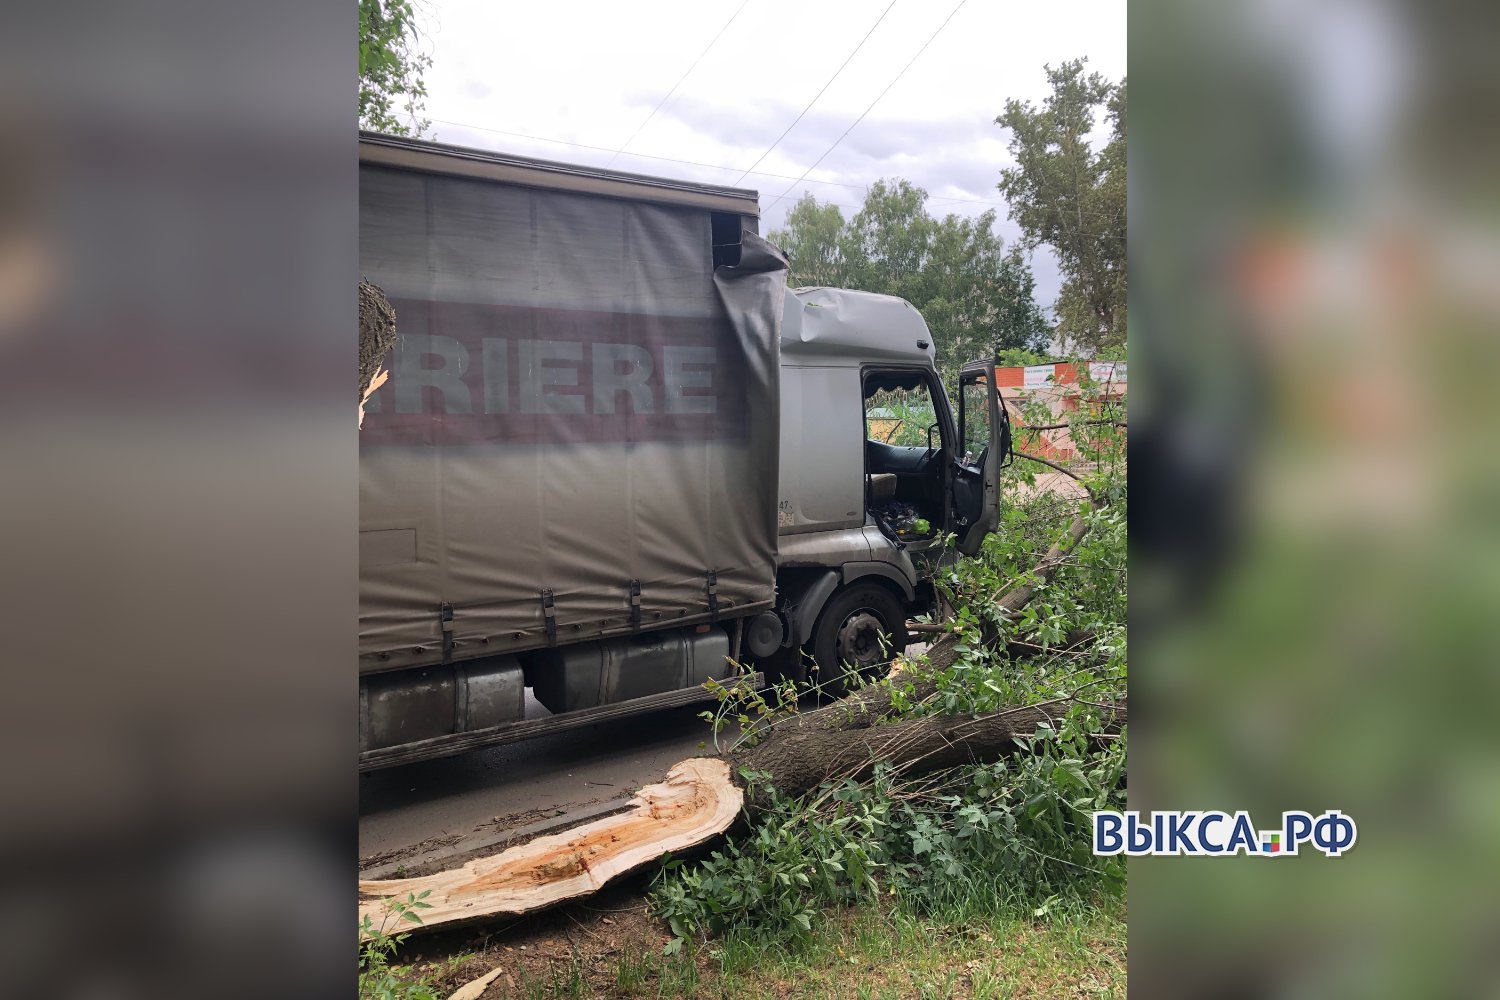 Дерево упало на грузовик во время движения